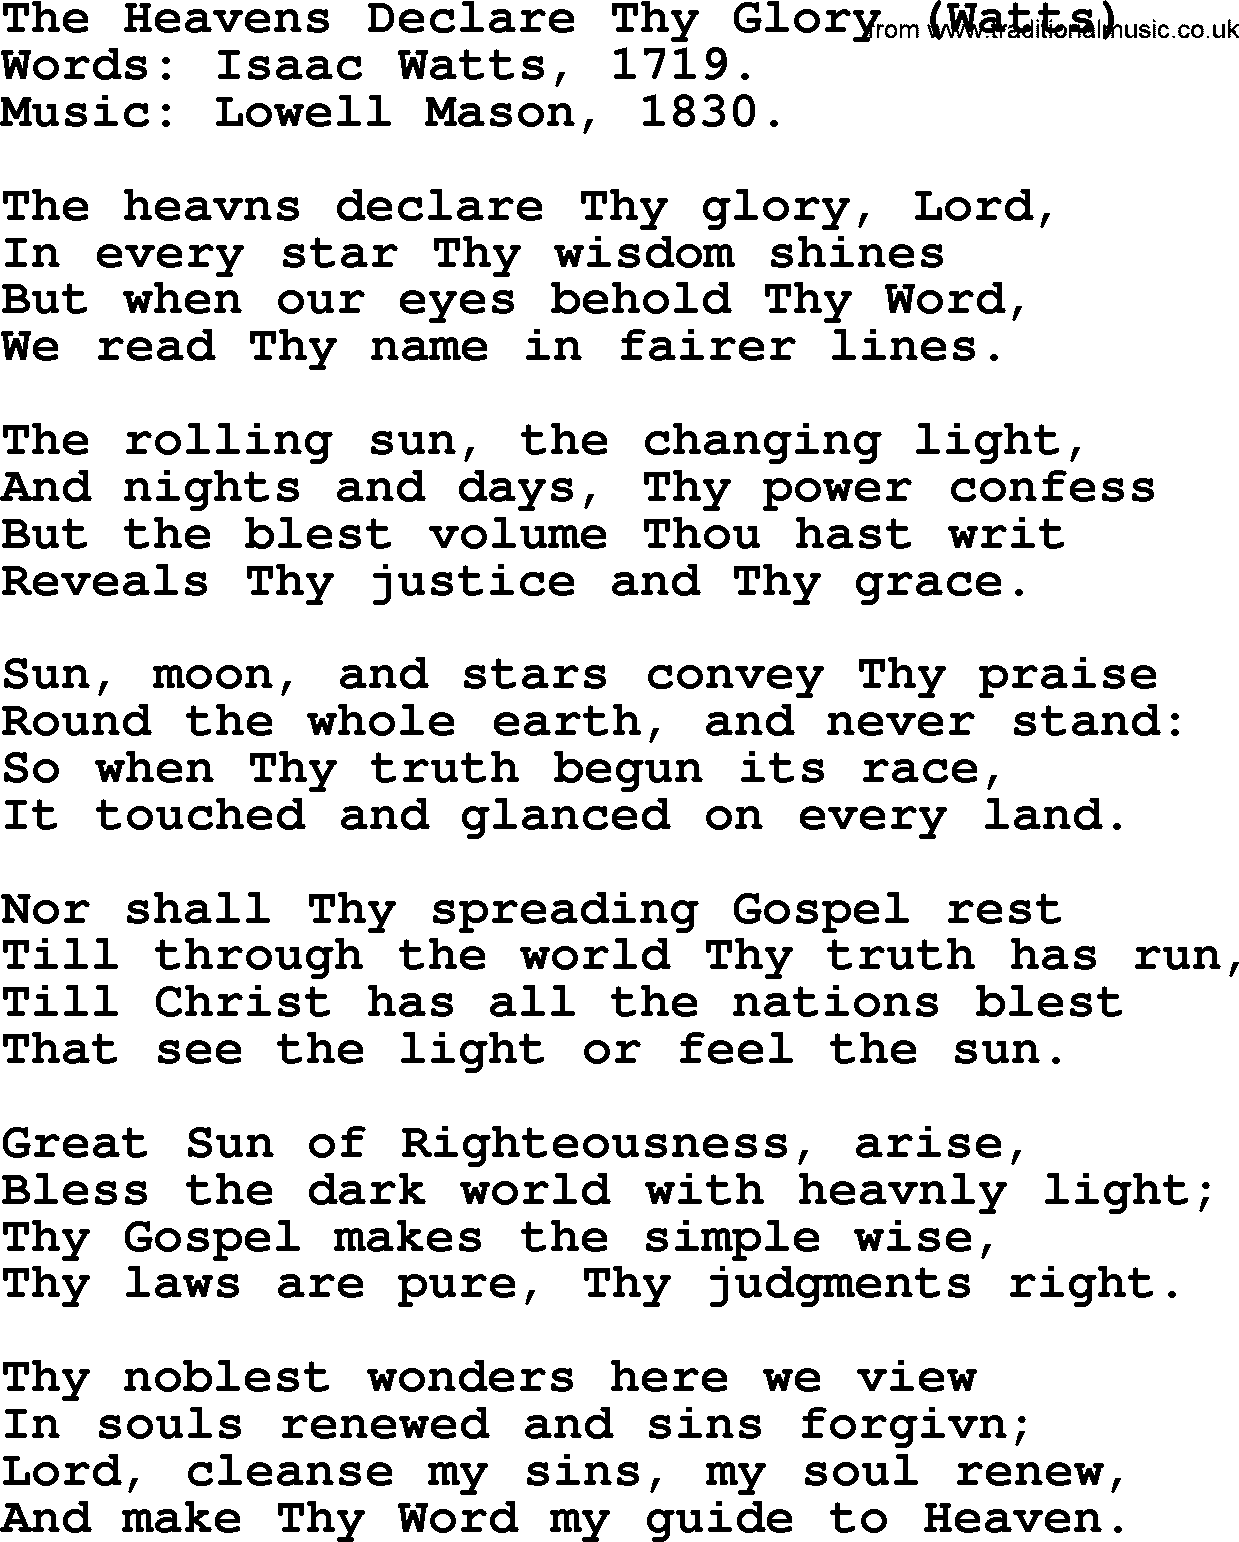 Isaac Watts Christian hymn: The Heavens Declare Thy Glory (Watts)- lyricss